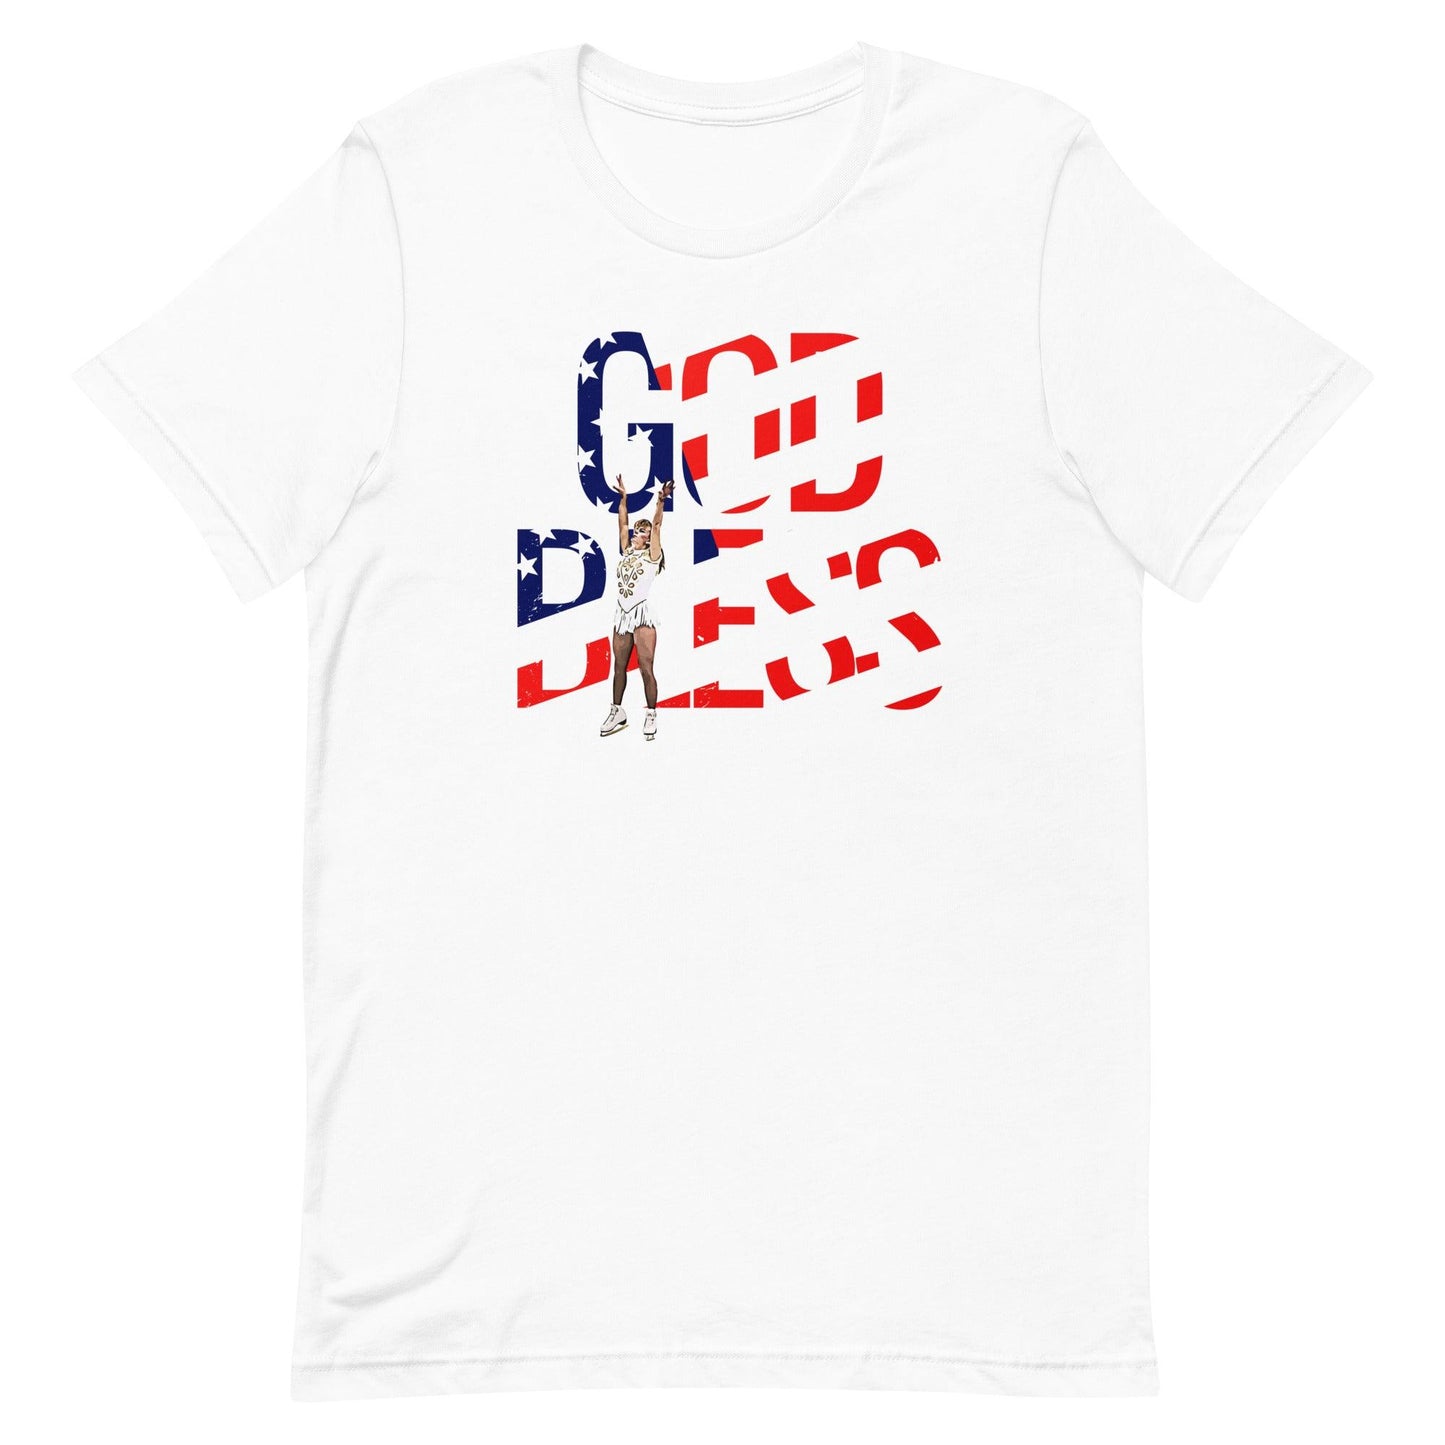 Tonya Harding "GOD BLESS" t-shirt - Fan Arch